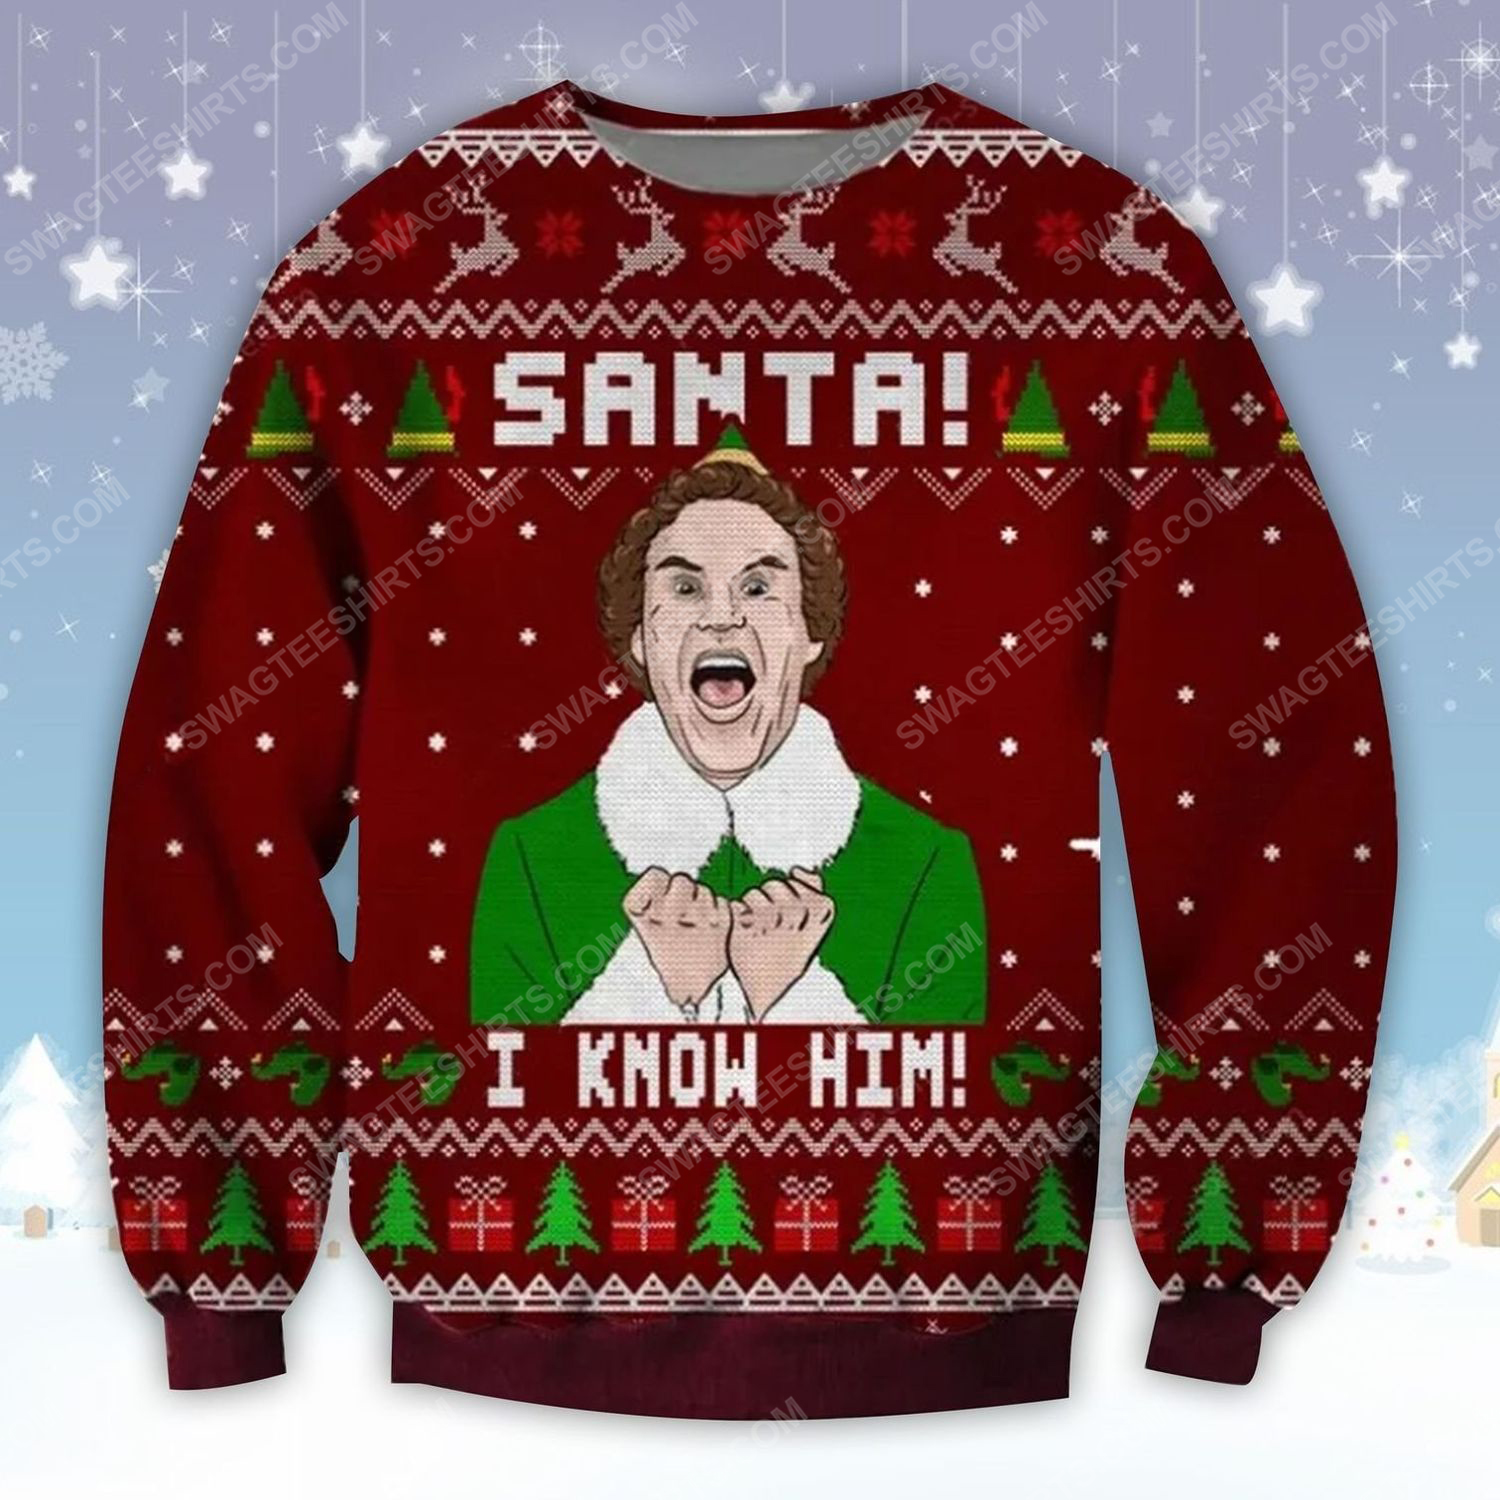 Elf buddy santa i know him ugly christmas sweater - Copy (2)